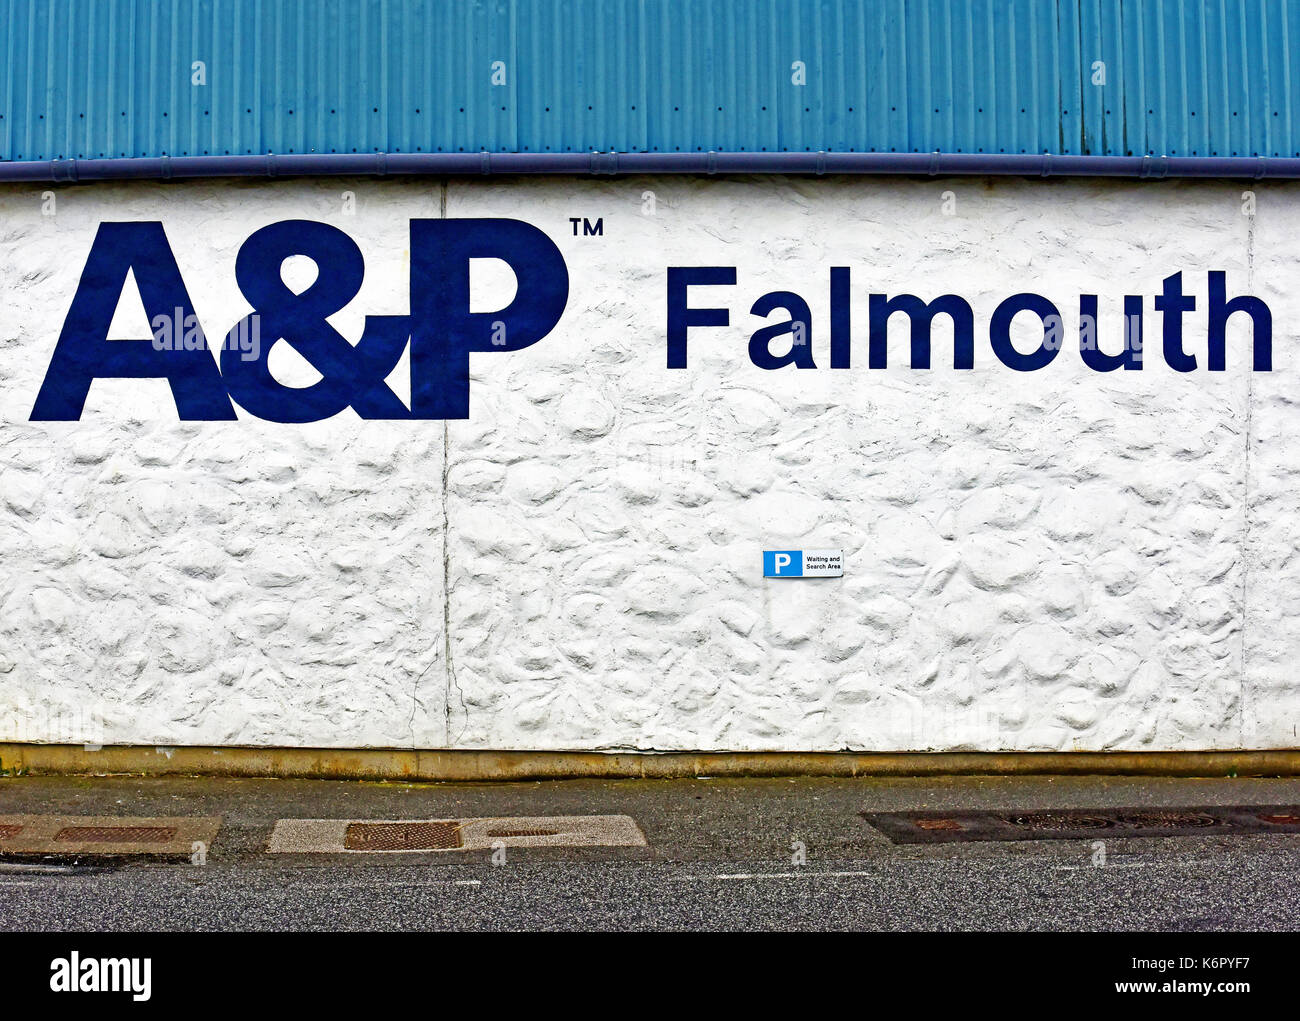 Falmouth cornwall Pendennis Shipyard a&p appledore Foto Stock